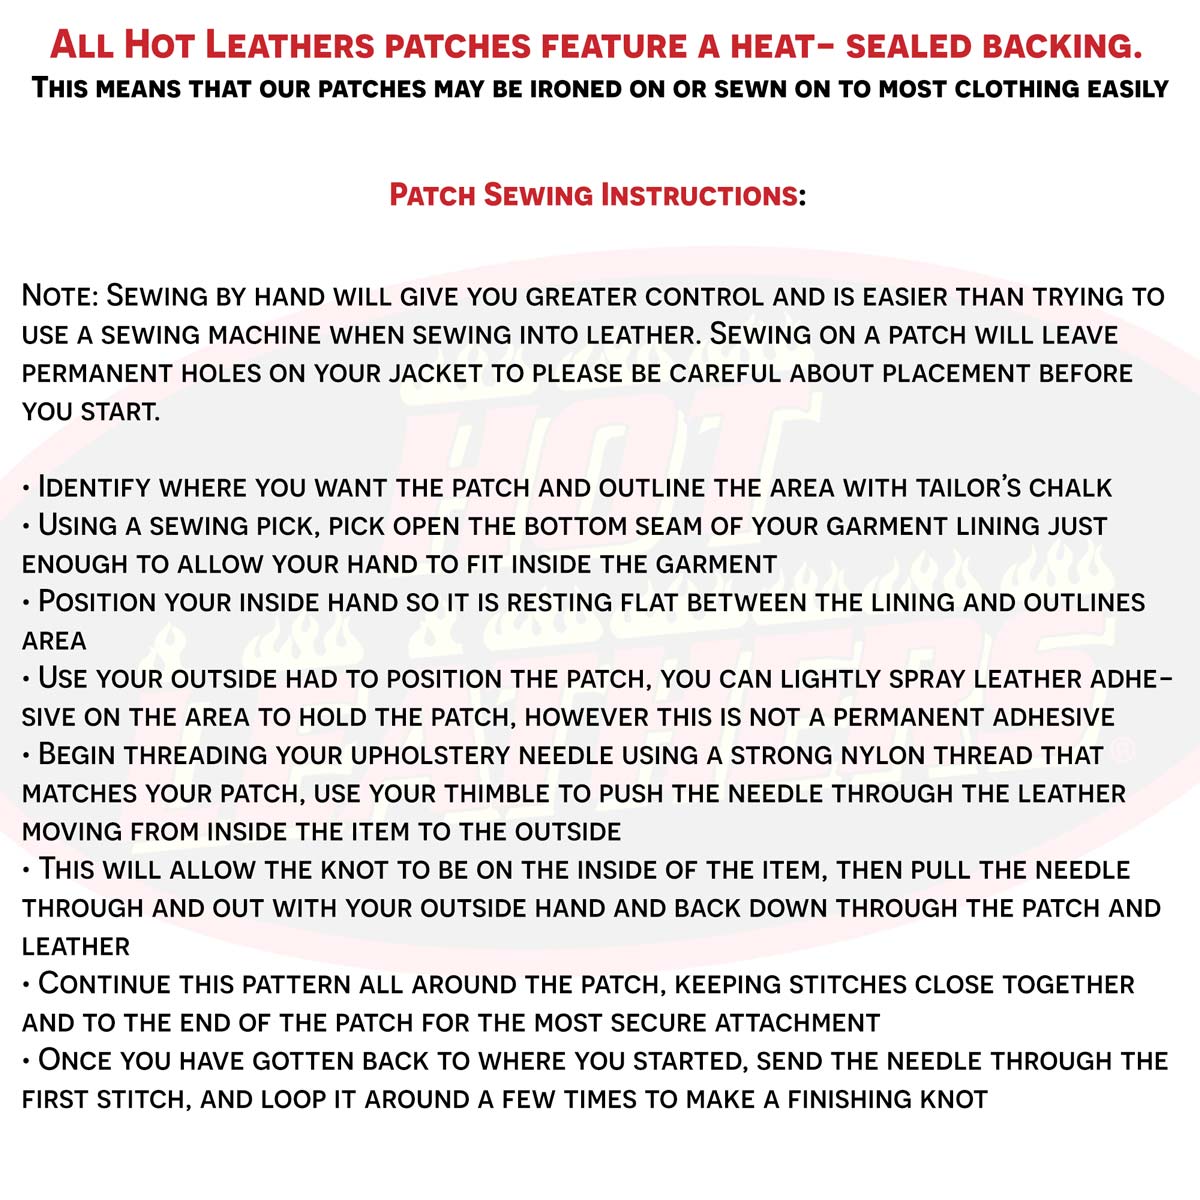 Hot Leathers Hot Streak 4"x5" Patch PPA8847